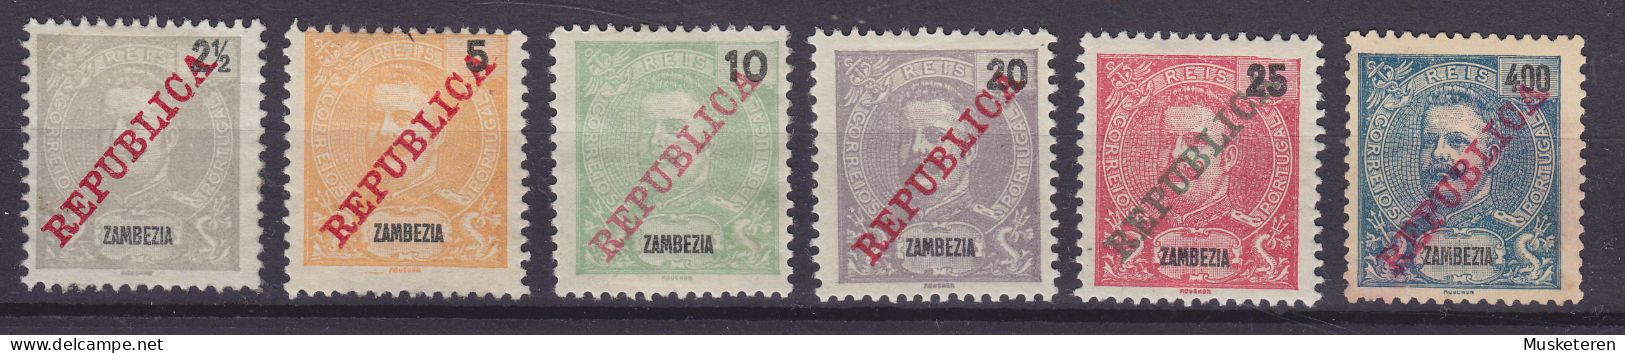 Zambezia 1911 Mi. 55-57, 59-60, 67 König Karl I. Overprinted REPUBLICA, MH*/MNG (*) (2 Scans) - Zambezia